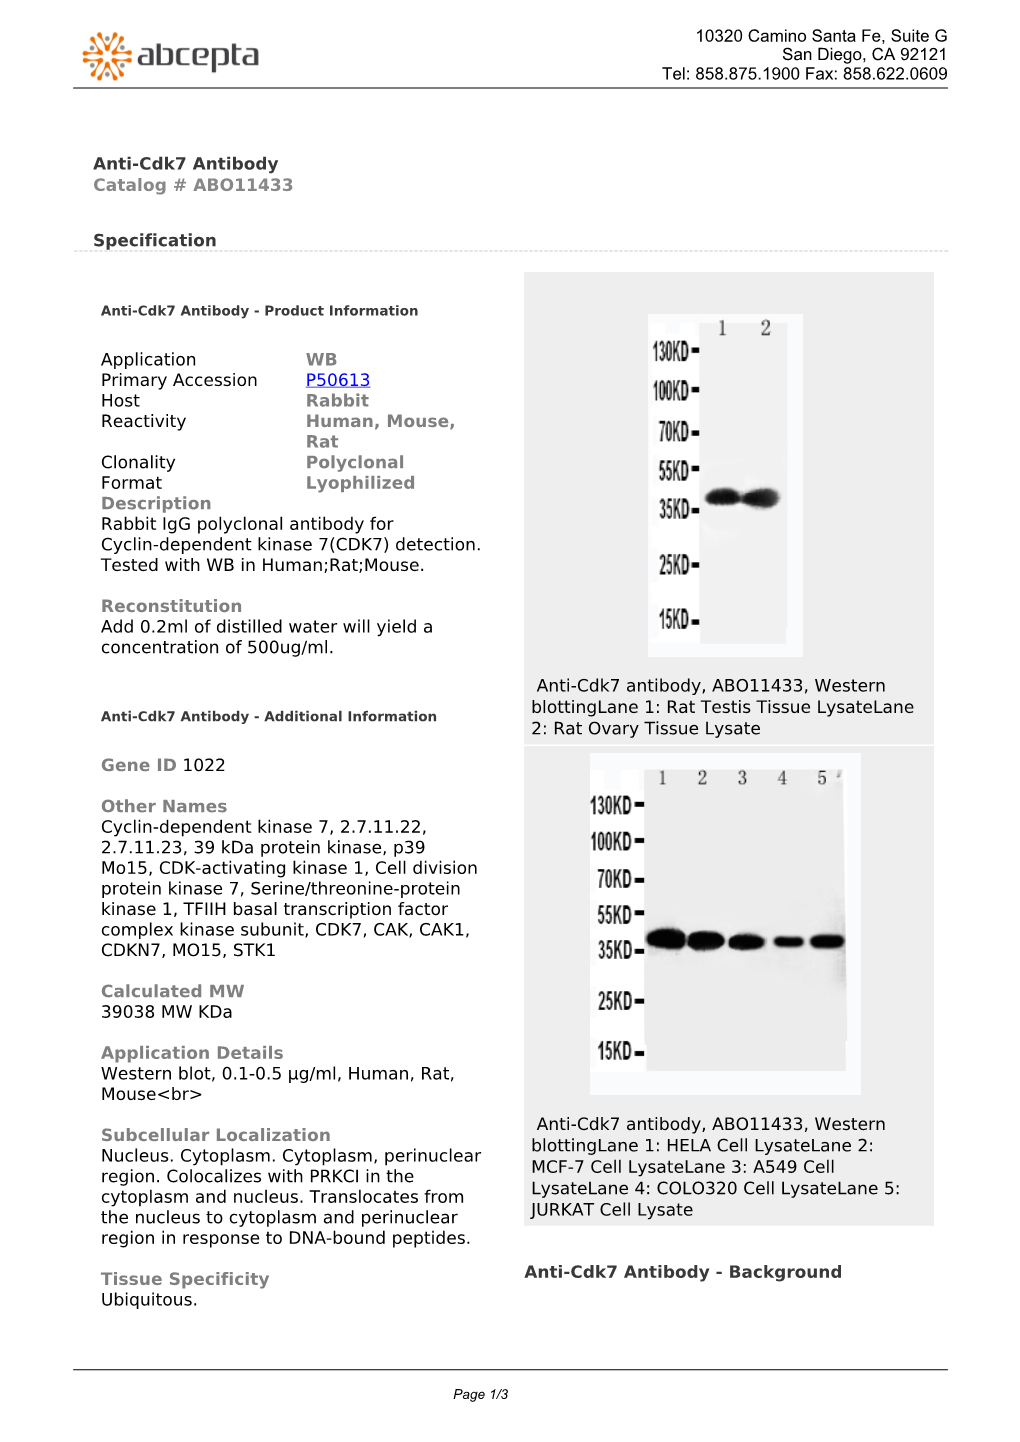 Anti-Cdk7 Antibody Catalog # ABO11433